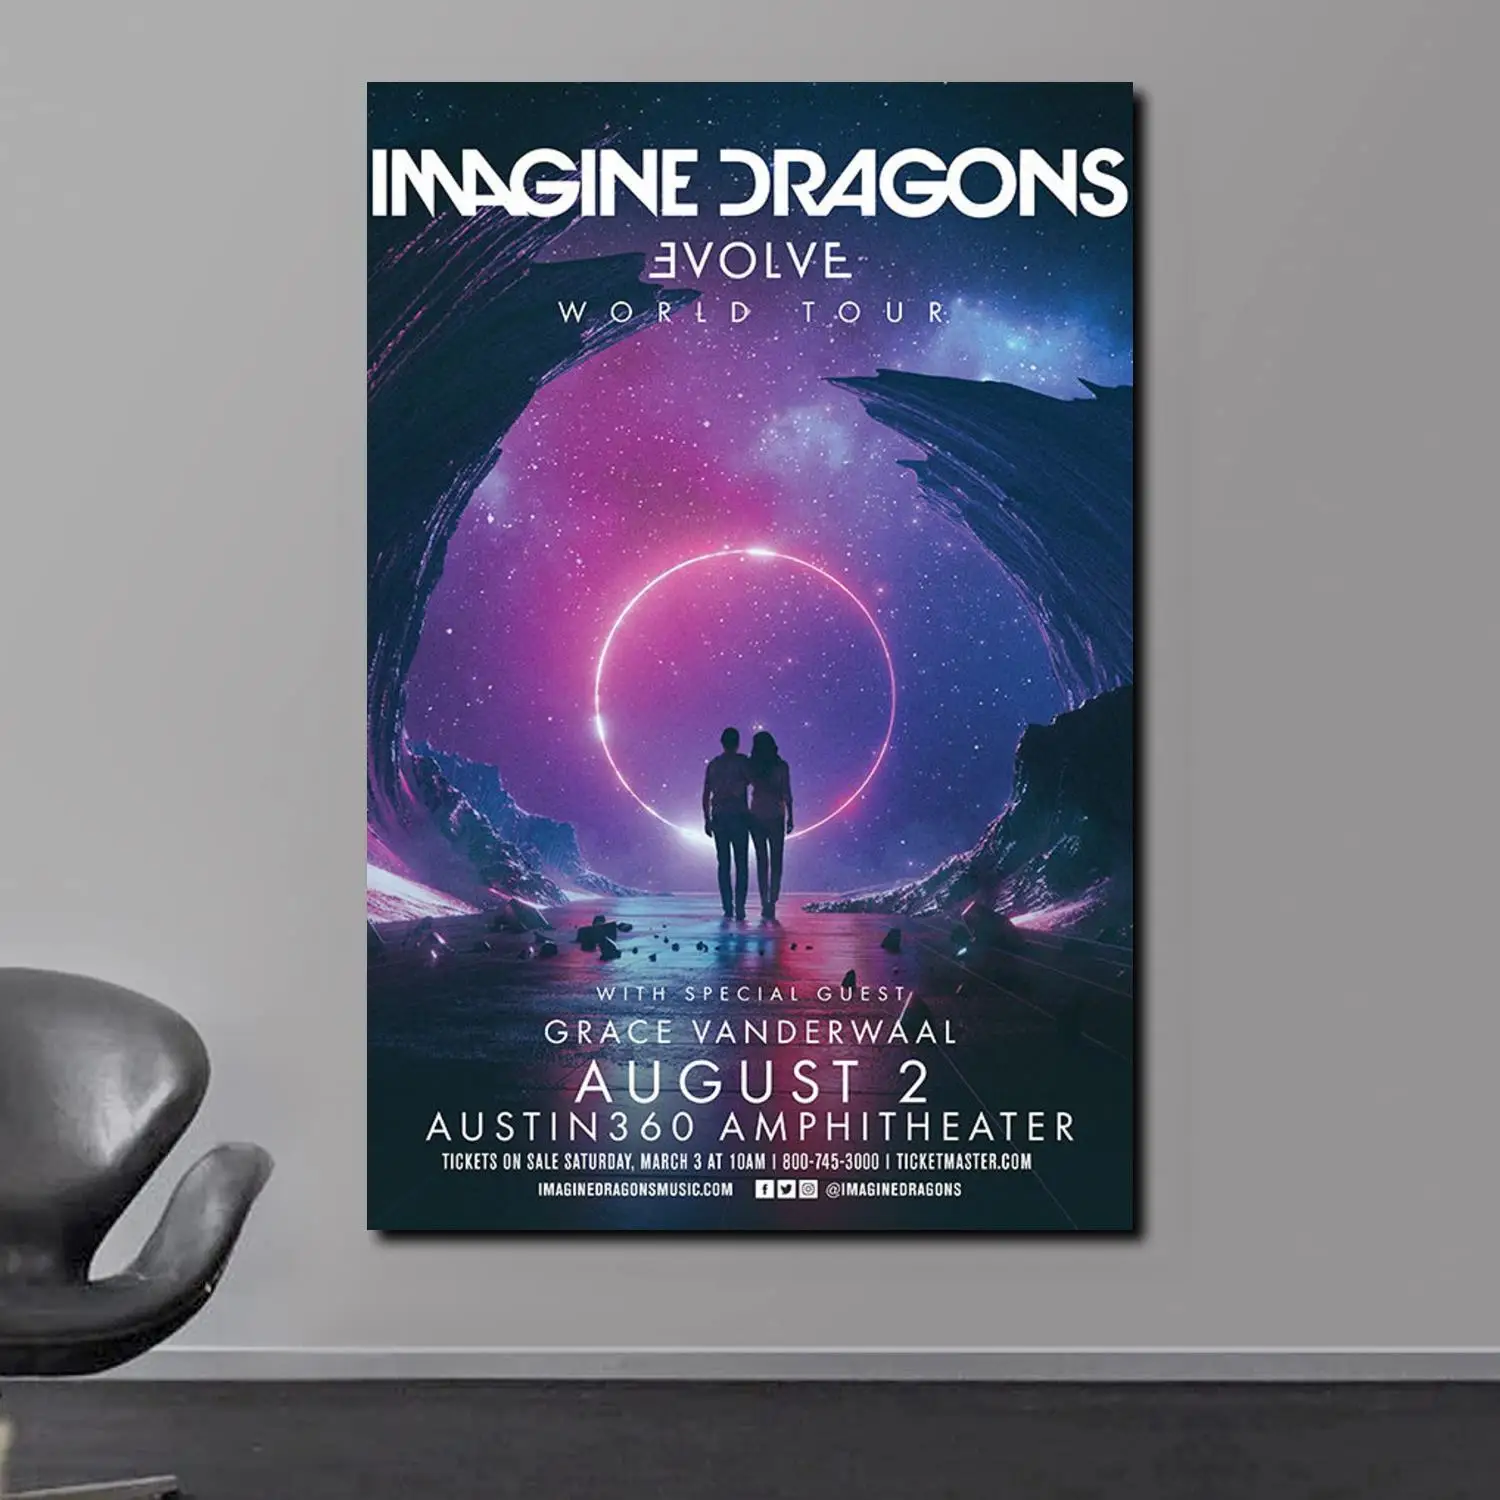 Imagine Dragons Evolve Art Print Posters HD Print Canvas Poster Bedroom Decor Sports Landscape Office Room 9 - Imagine Dragons Shop